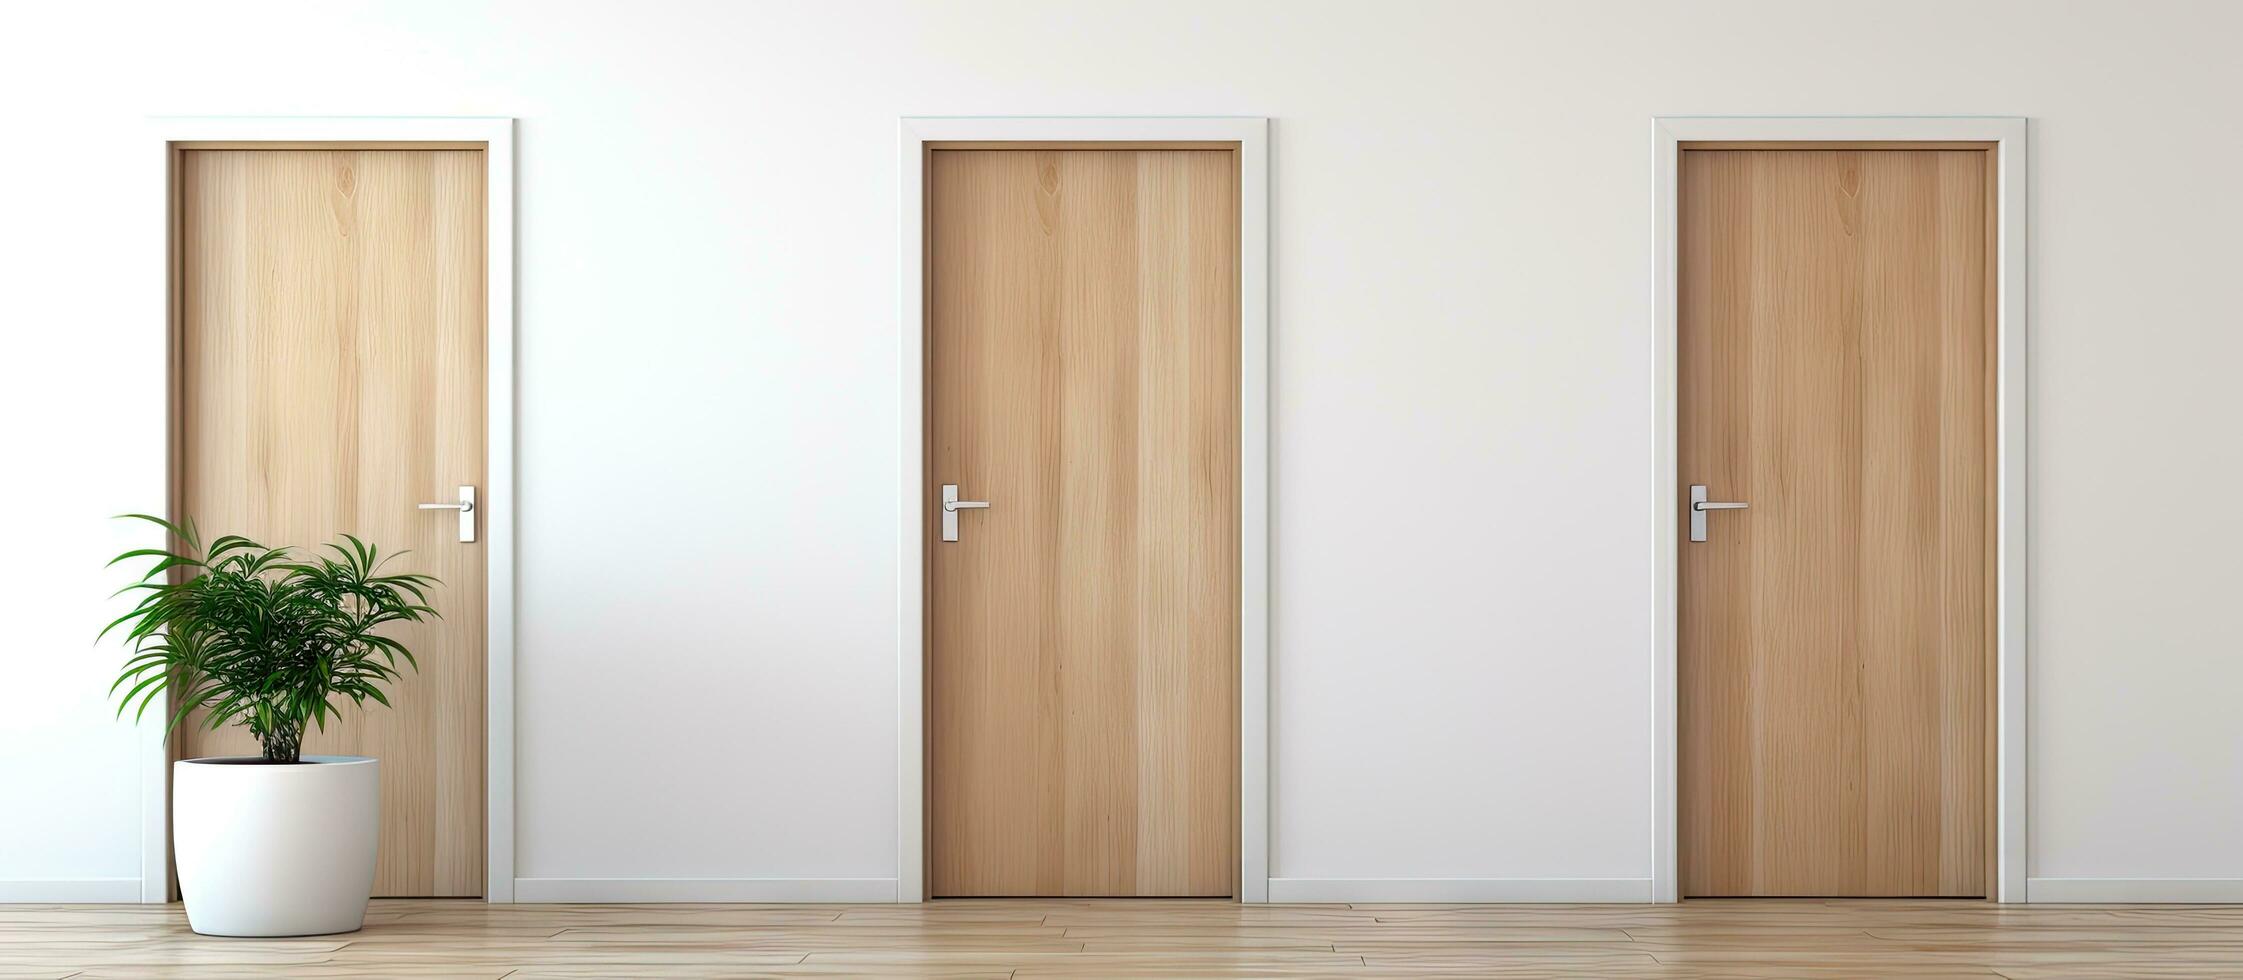 Contemporary timber door photo